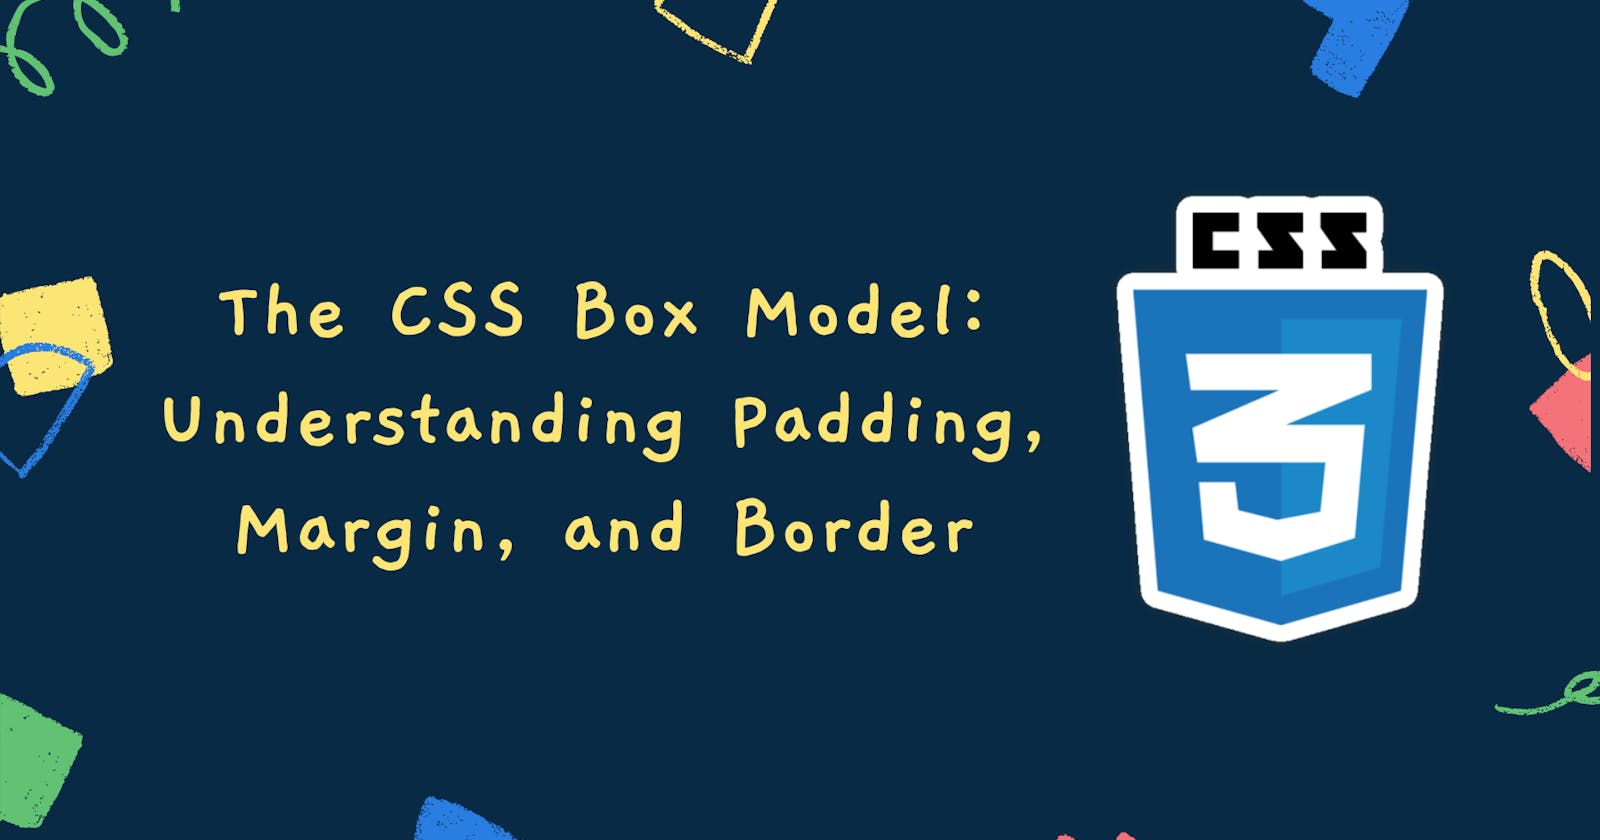 The CSS Box Model: Understanding Padding, Margin, and Border